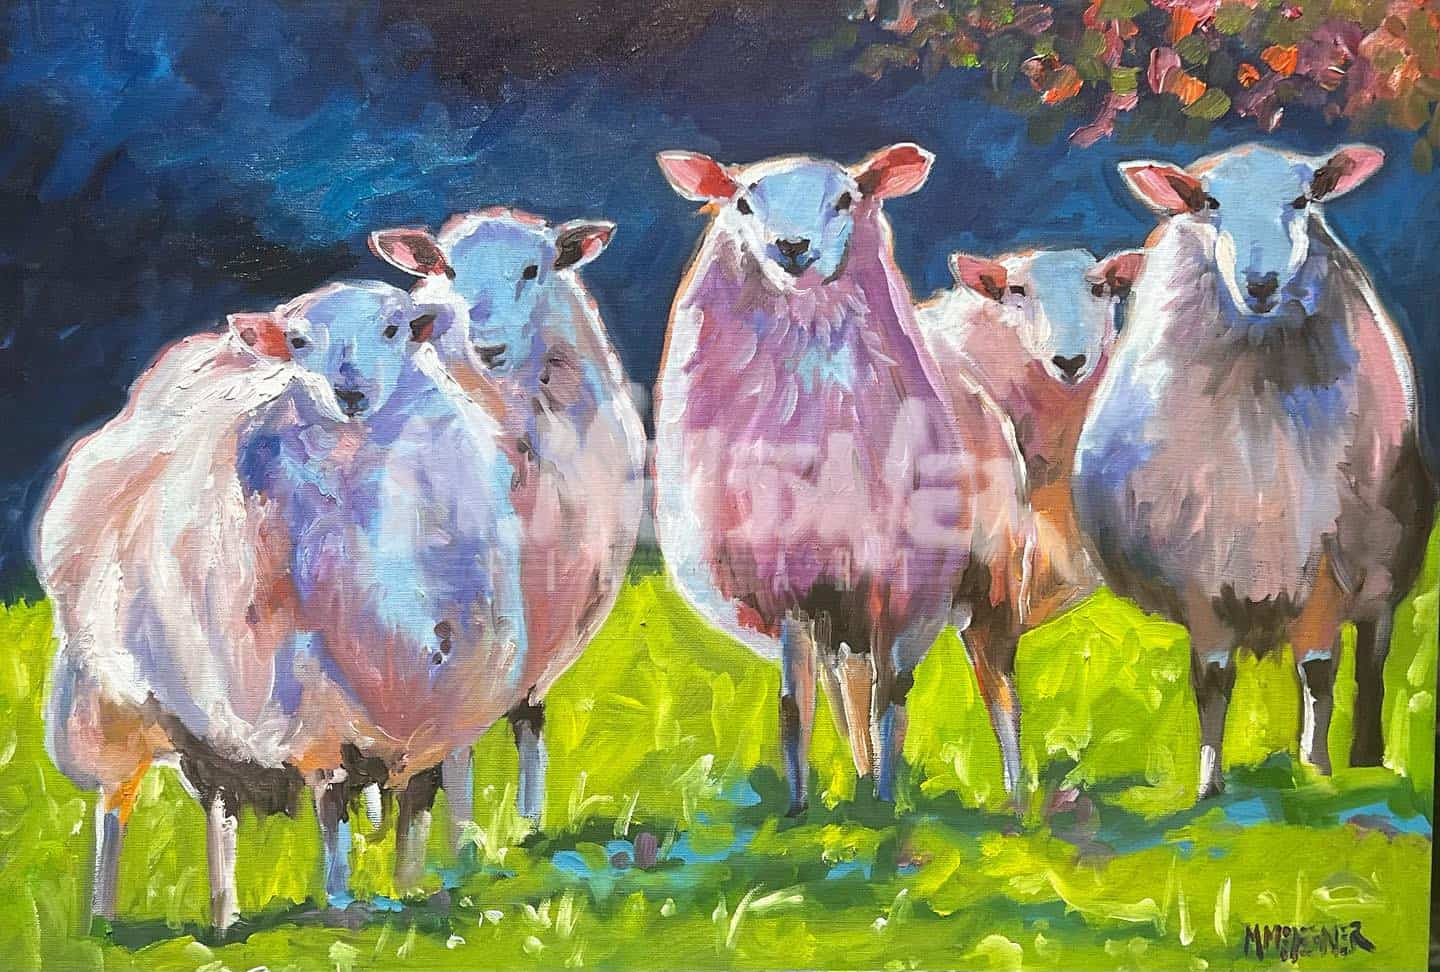 5 Ewes (Sheep) painting